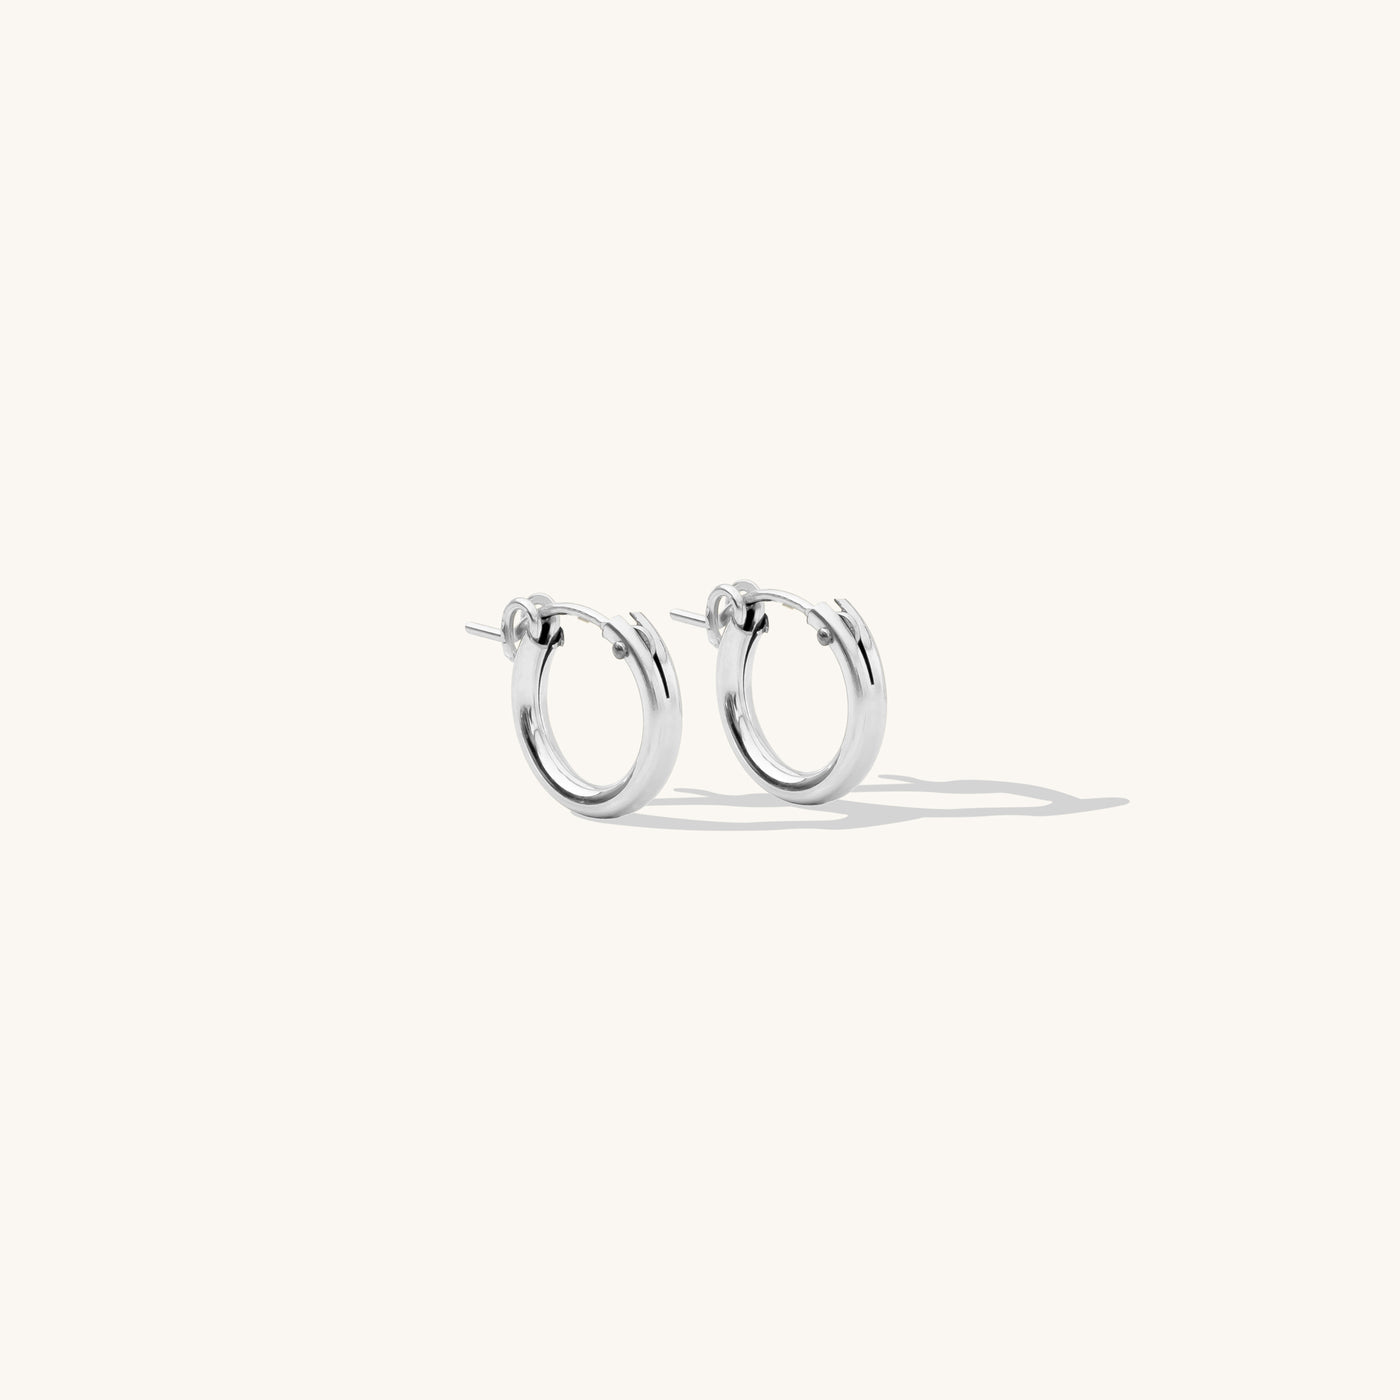 Small (13mm) Everyday Hoop Earrings by Simple & Dainty Jewelry